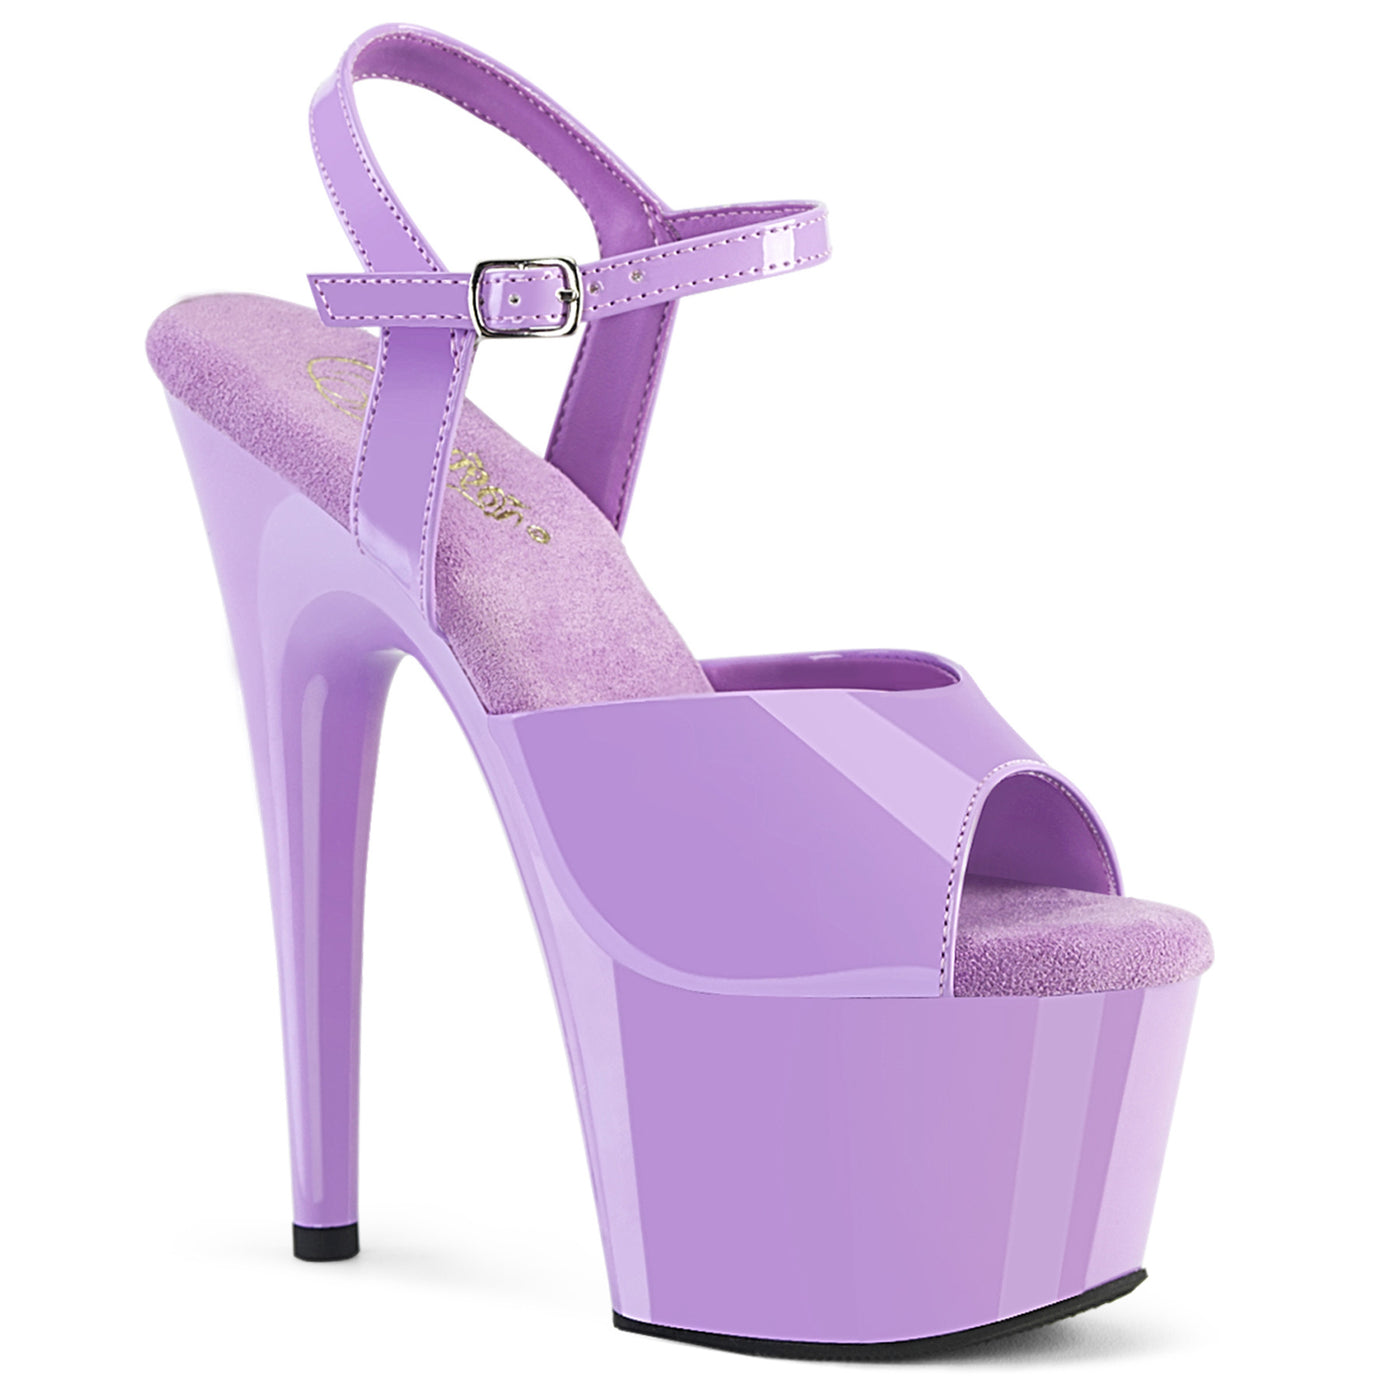 DELIGHT-669UV Exotic Sandal | Fuchsia Patent - Fuchsia / 7 / Patent |  Pleaser heels, Hot pink heels, Criss cross sandals